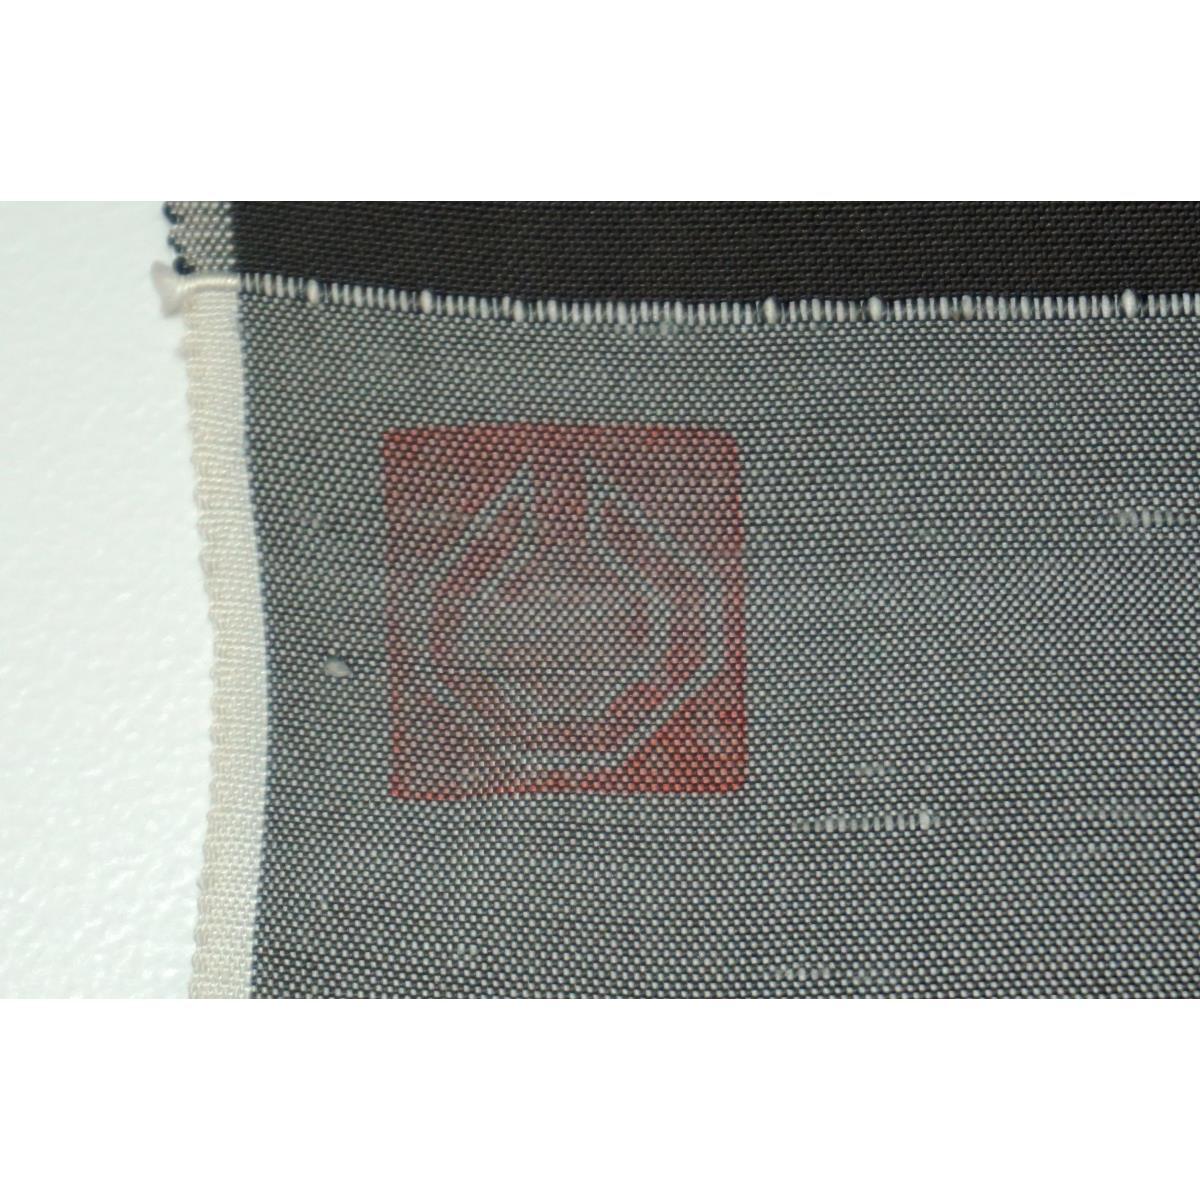 [Unused items] Kijyaku cloth Ushikubi Tsumugi